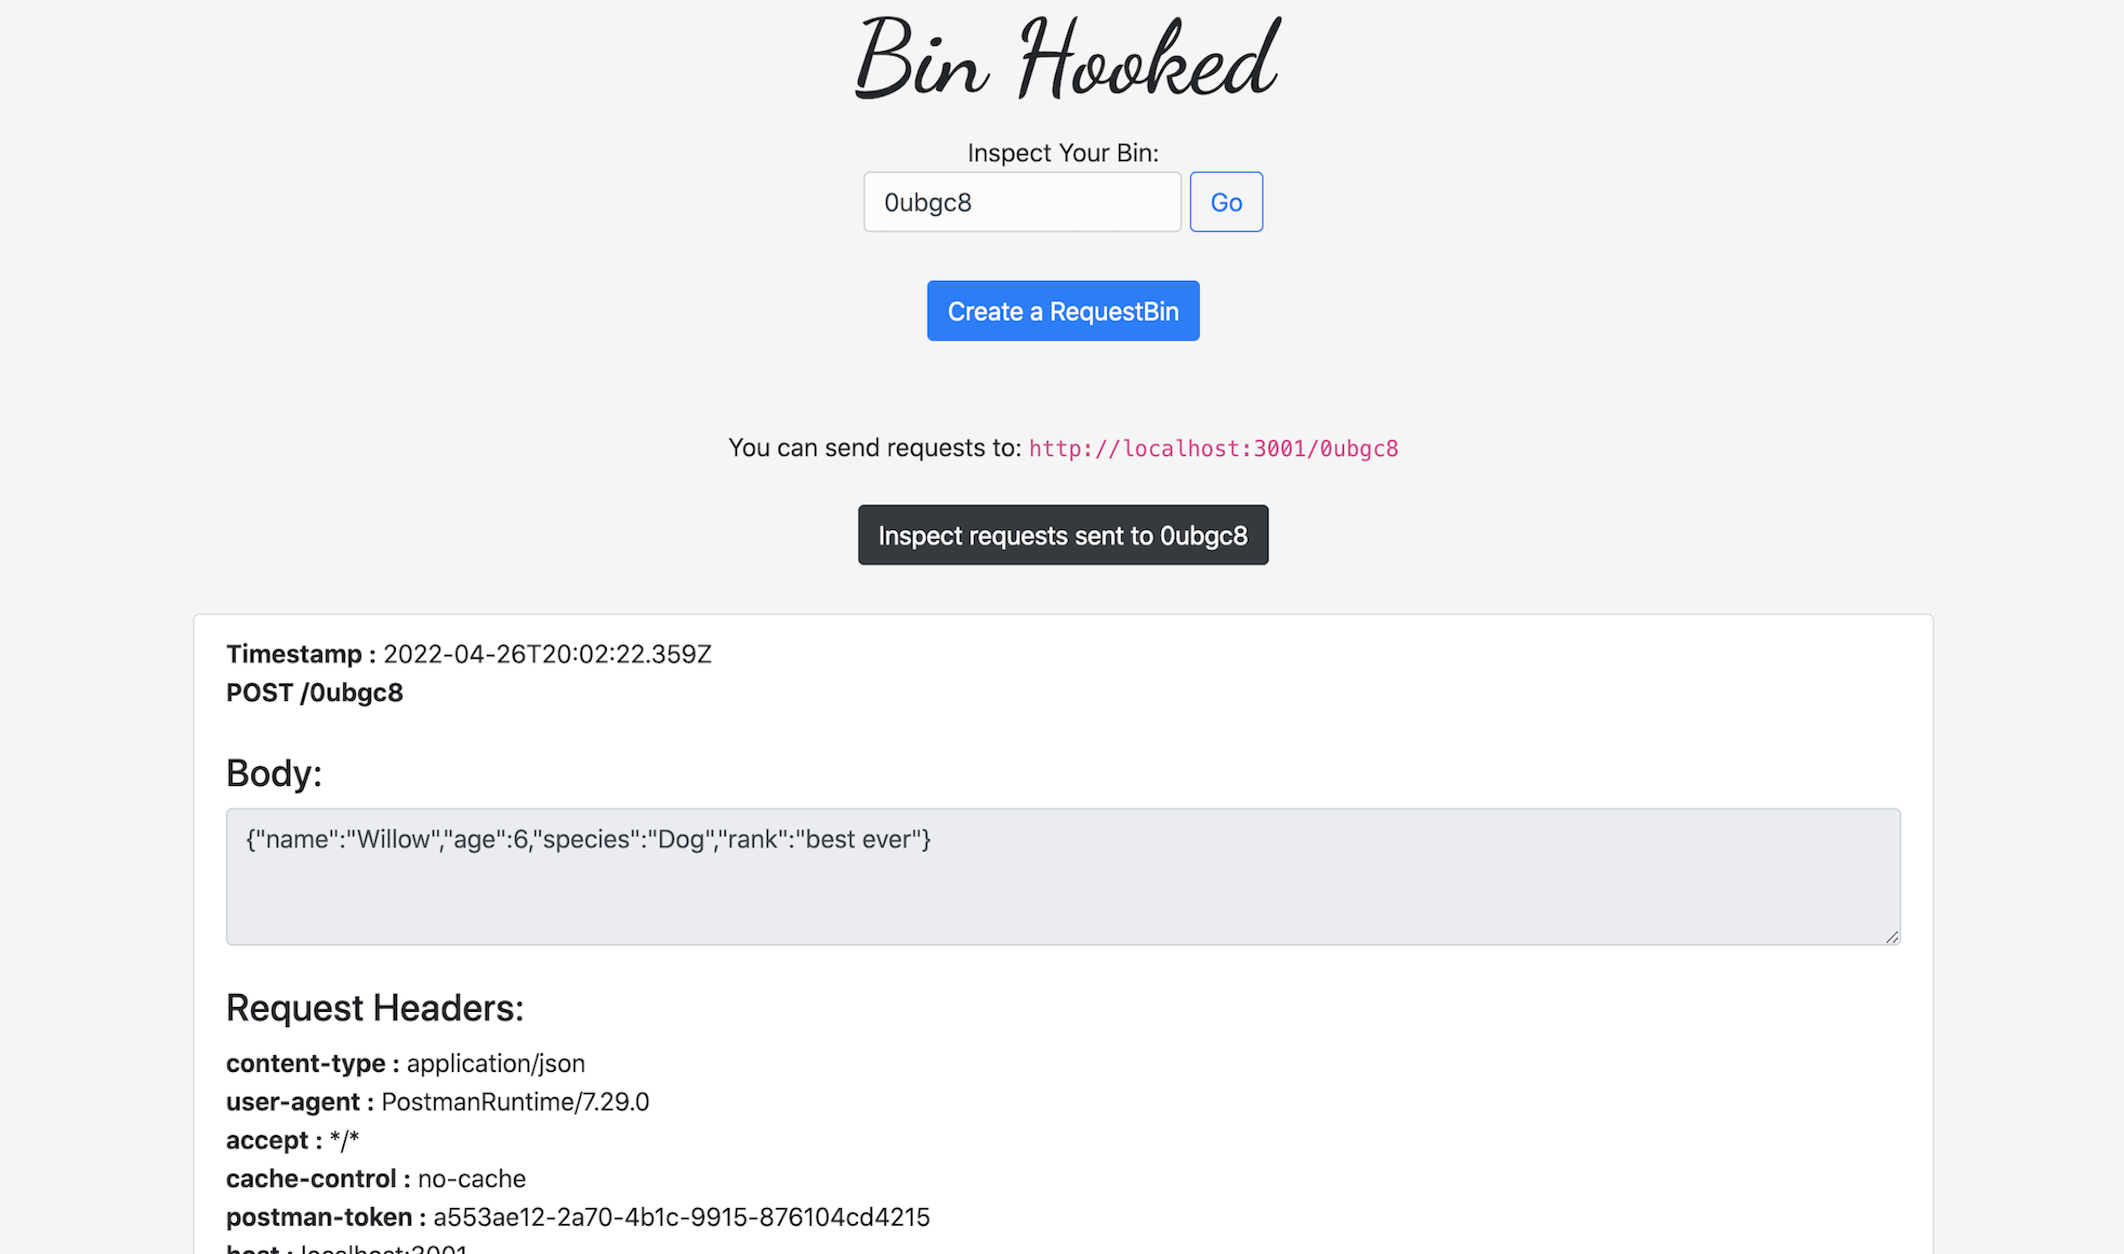 Screenshot of BinHooked application